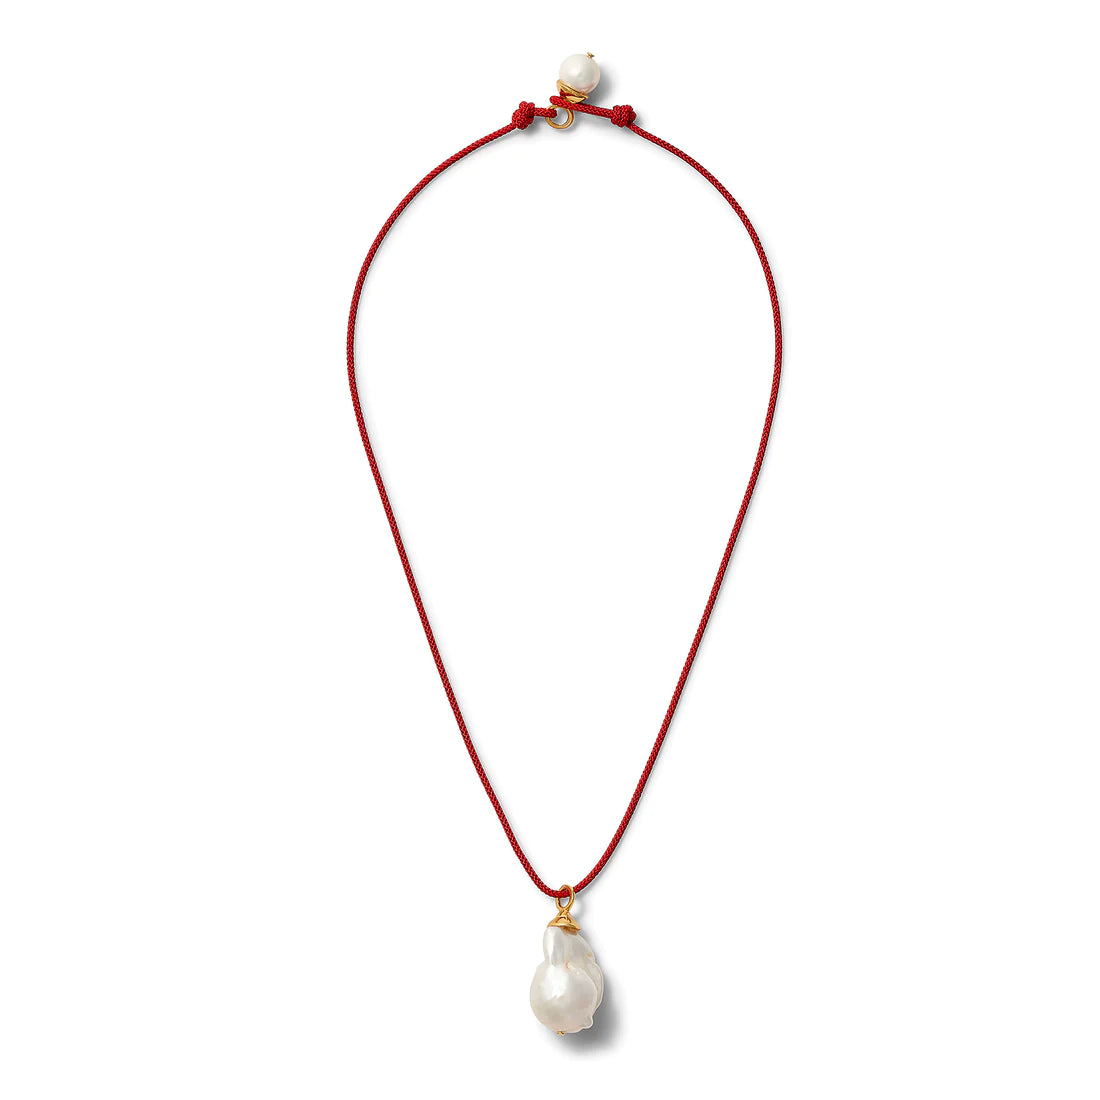 Big baroque twisted cord w/pearl pendant